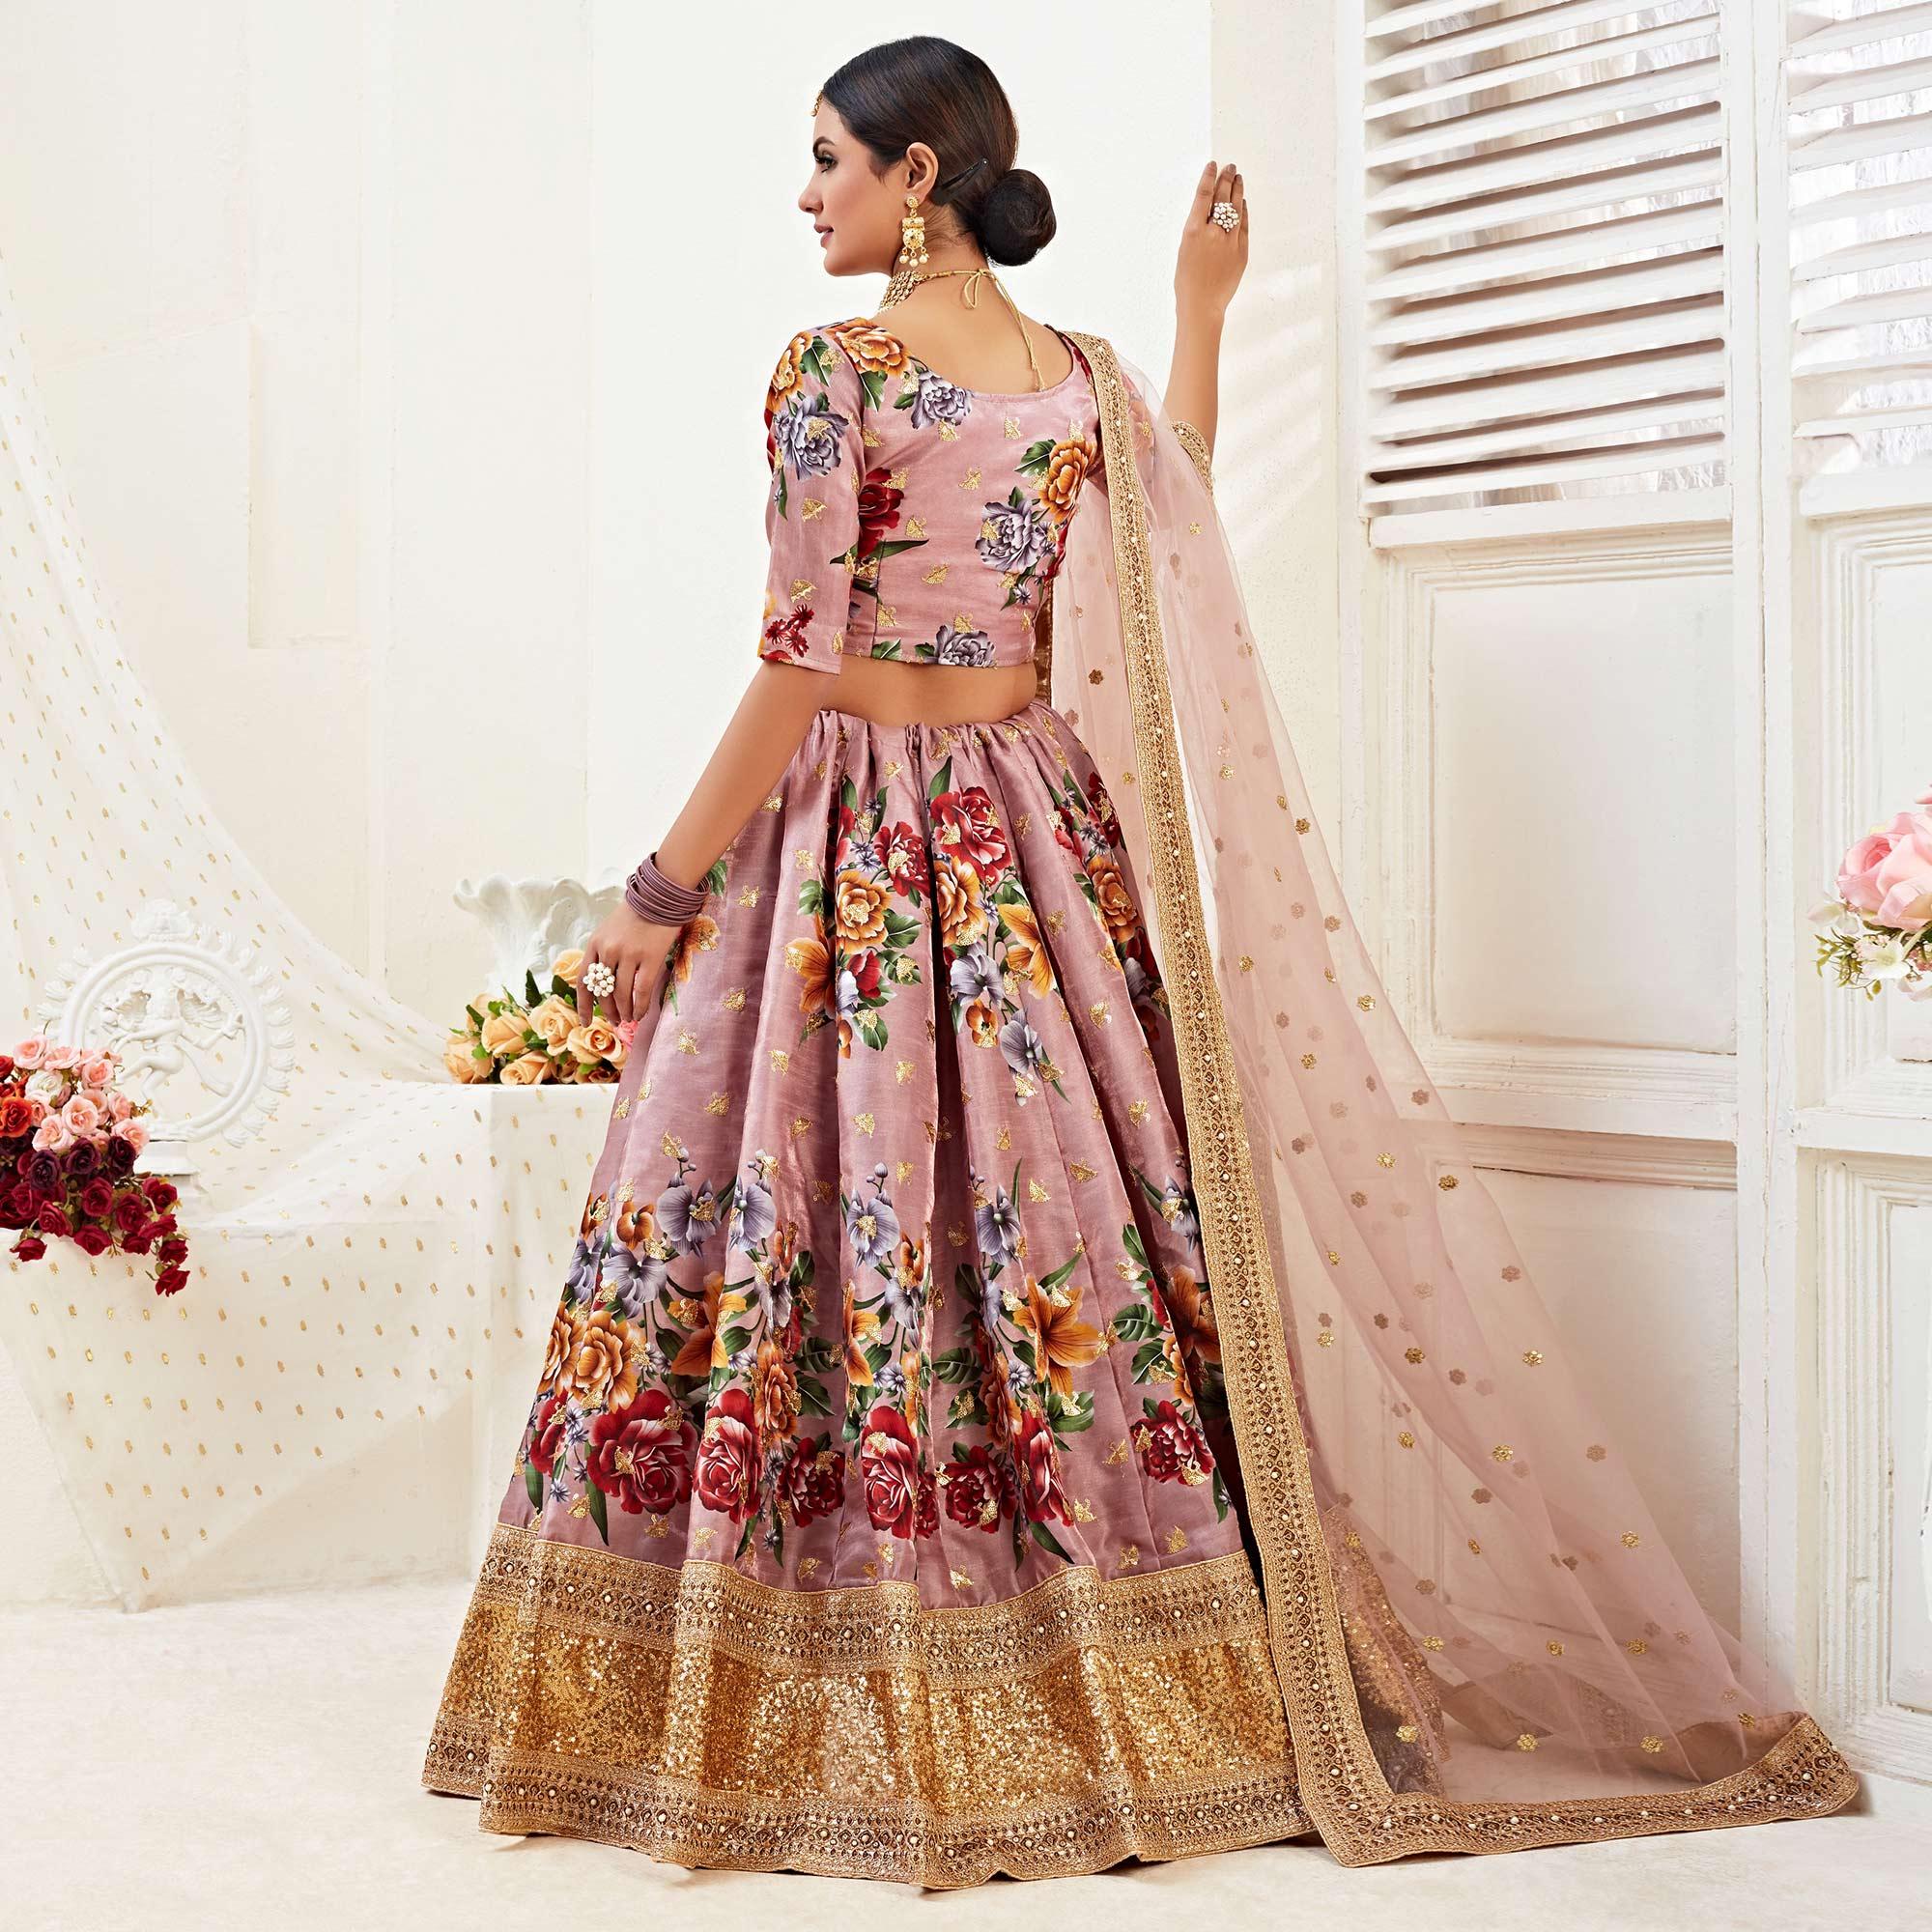 Sensational Rosy Brown Colored Designer Wedding Wear Floral Printed Banglori Satin Lehenga Choli - Peachmode